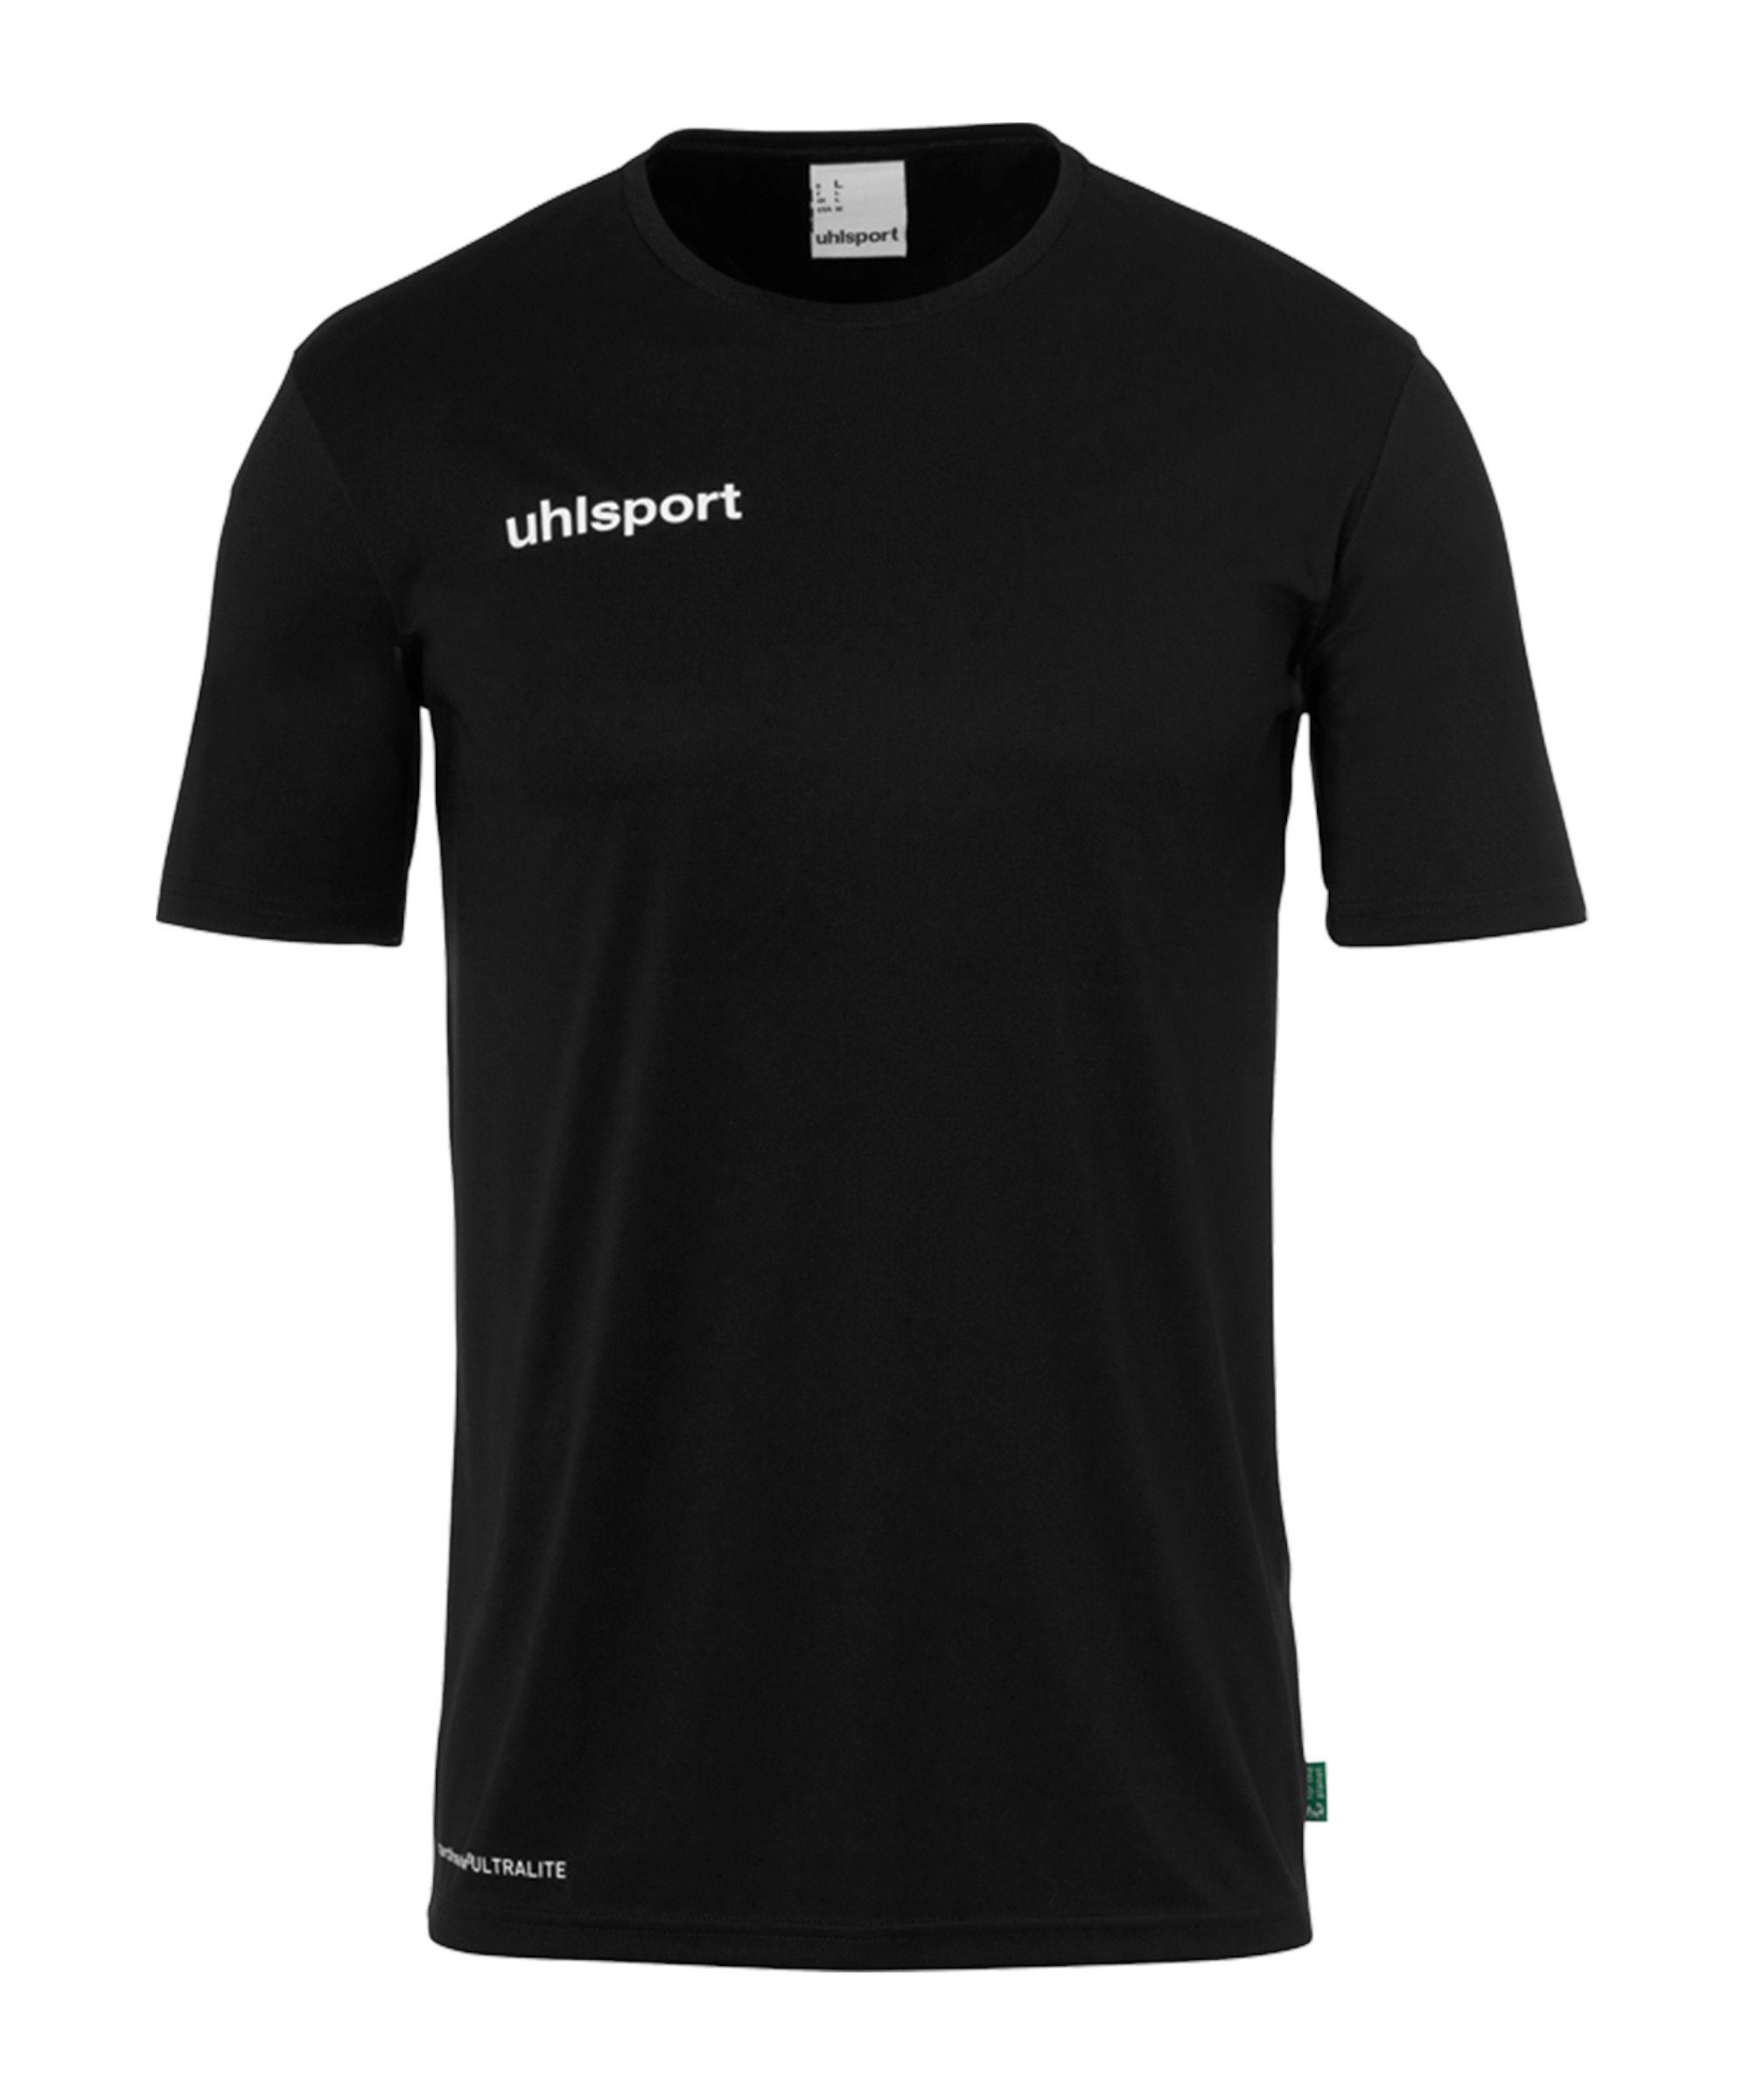 uhlsport default T-Shirt schwarz Functional T-Shirt Essential